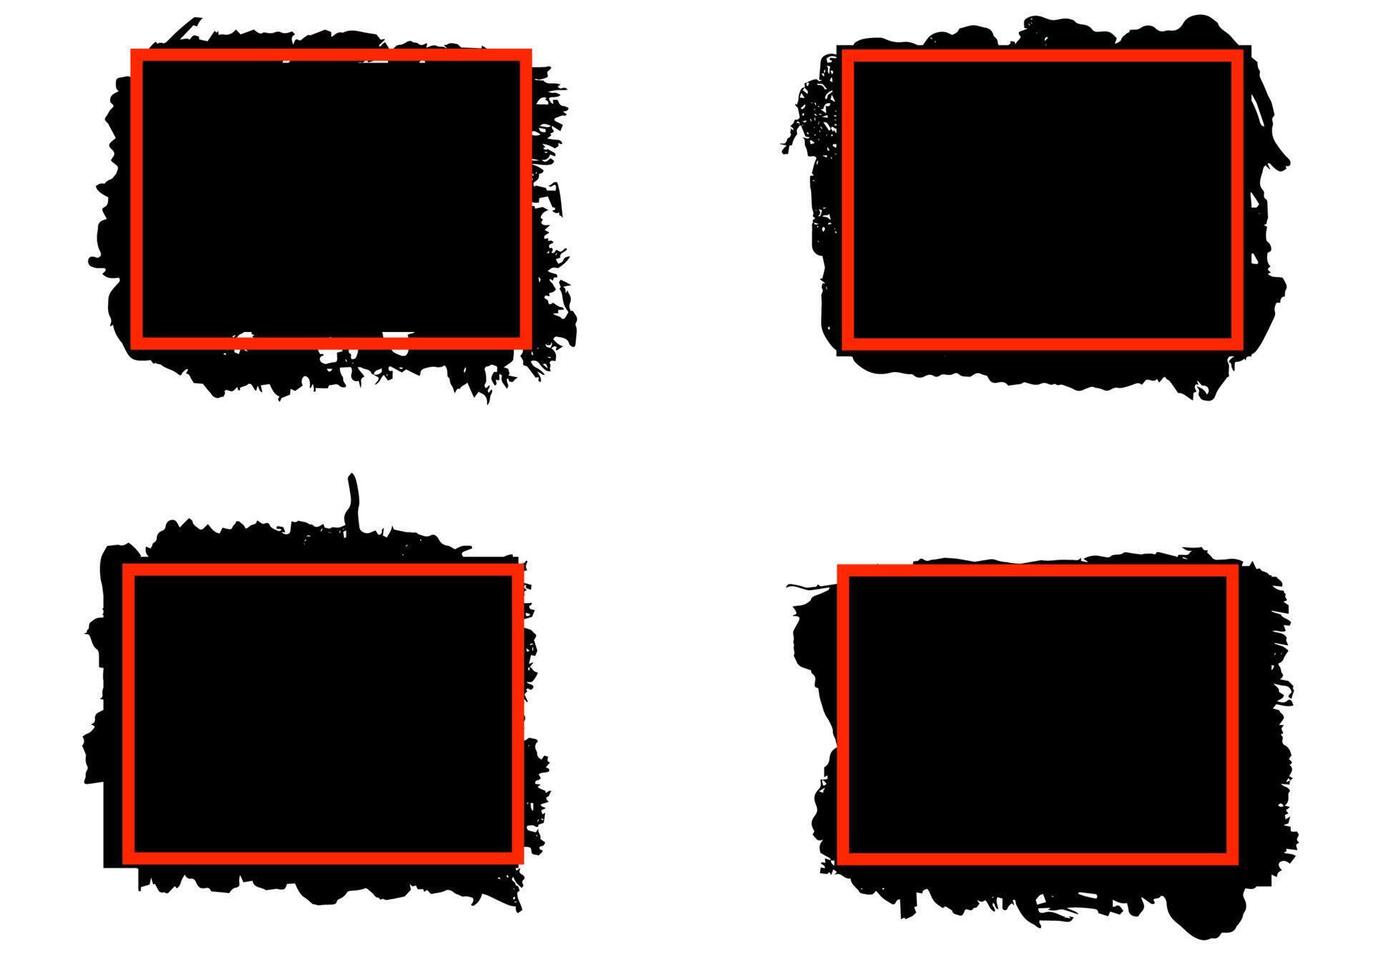 grunge achtergronden instellen. zwarte verf penseelstreek over vierkante frame. vector illustratie